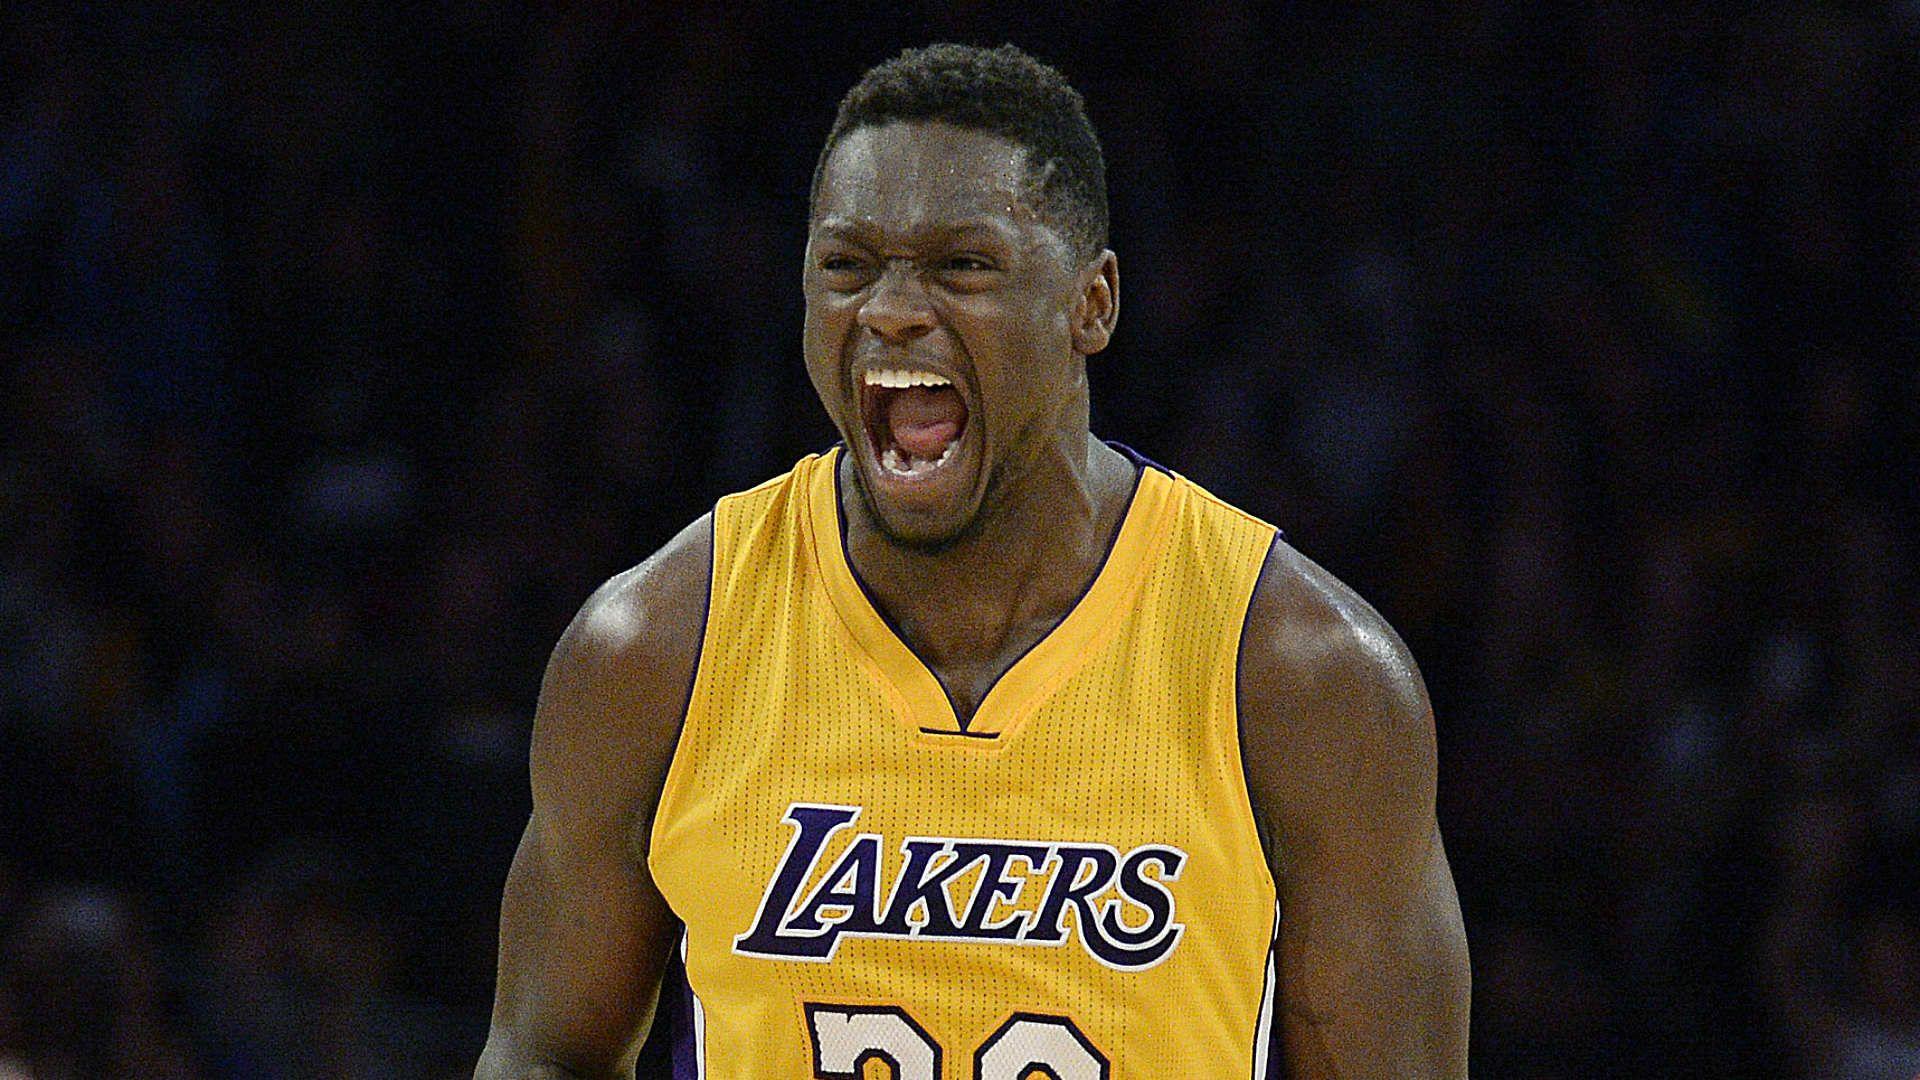 NBA fines Lakers' Julius Randle $15K for 'obscene gesture'. NBA